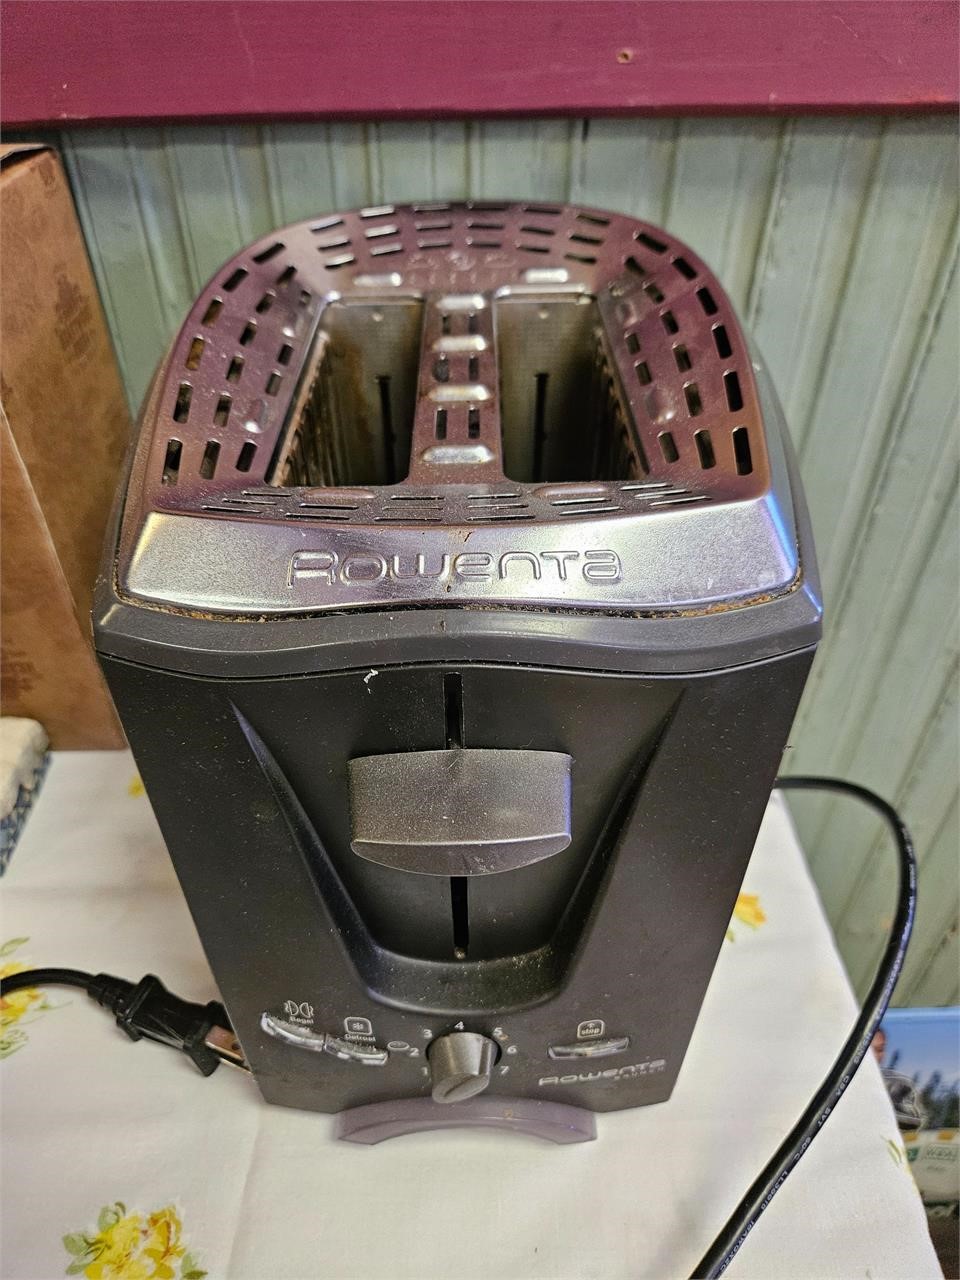 Rowenta Toaster